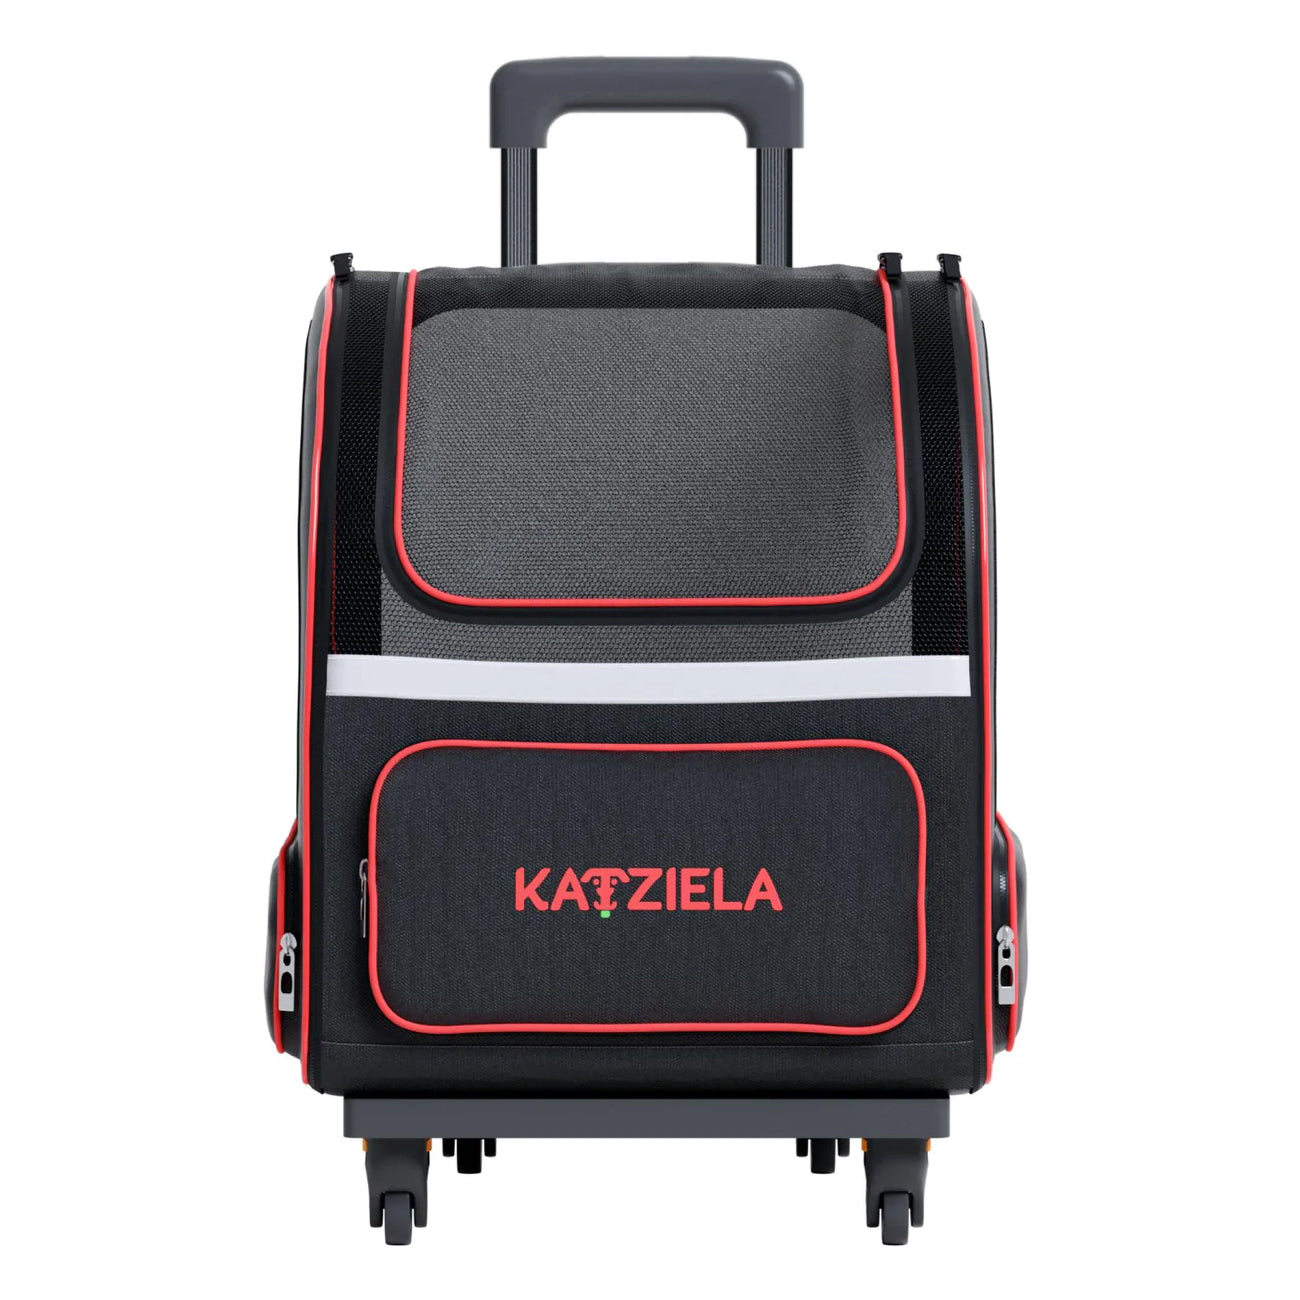 Katziela Hybrid Adventurer Wheeled Carrier  Image